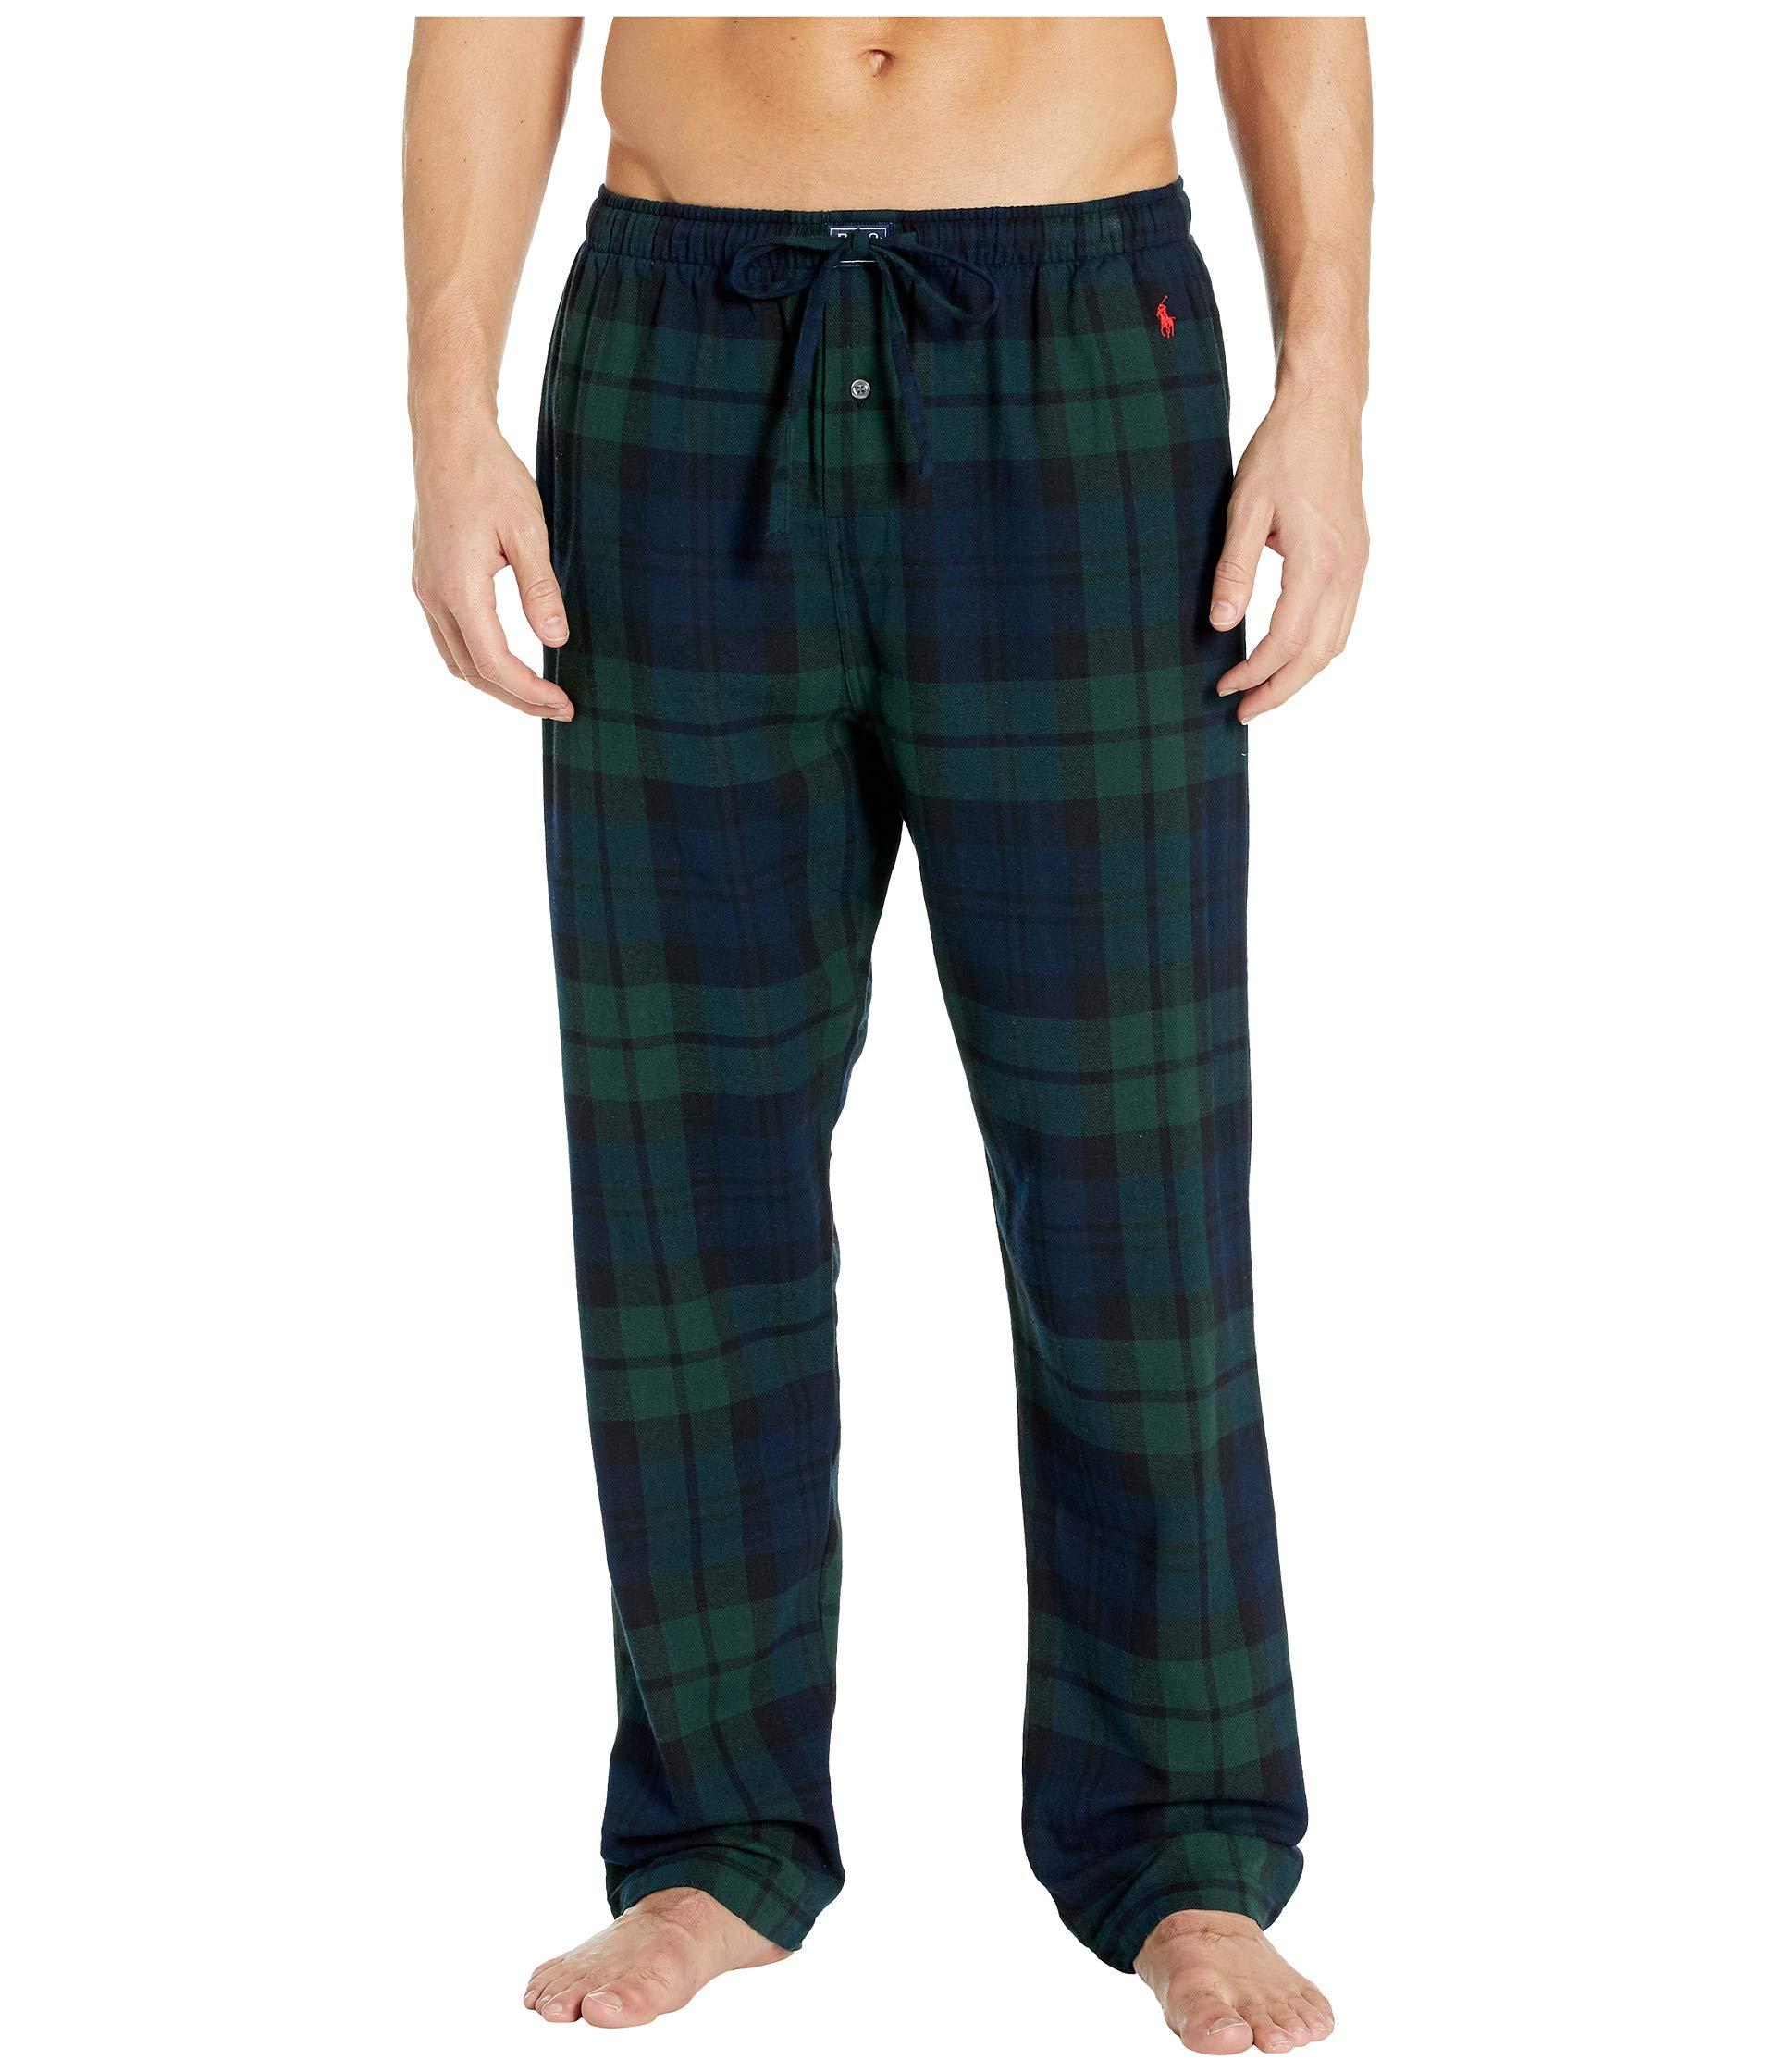 Polo Ralph Lauren Flannel Pajama Pants in Black for Men - Lyst